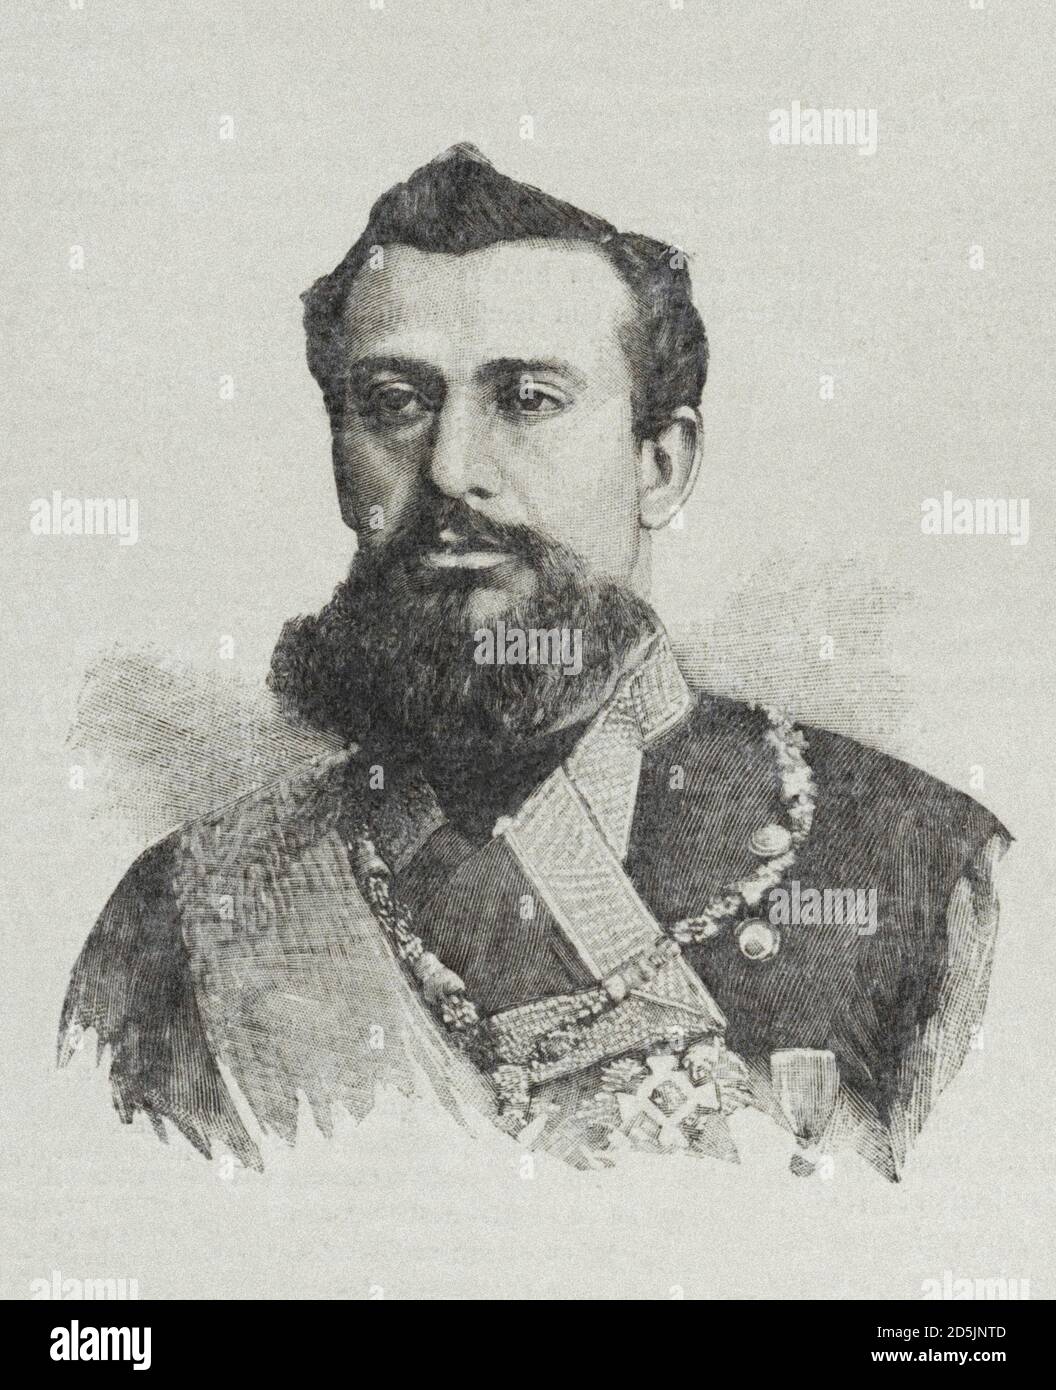 Albert I, Prince of Monaco Albert I (Albert Honore Charles Grimaldi; 1848 – 1922) was Prince of Monaco from 10 September 1889 until his death. He devo Stock Photo